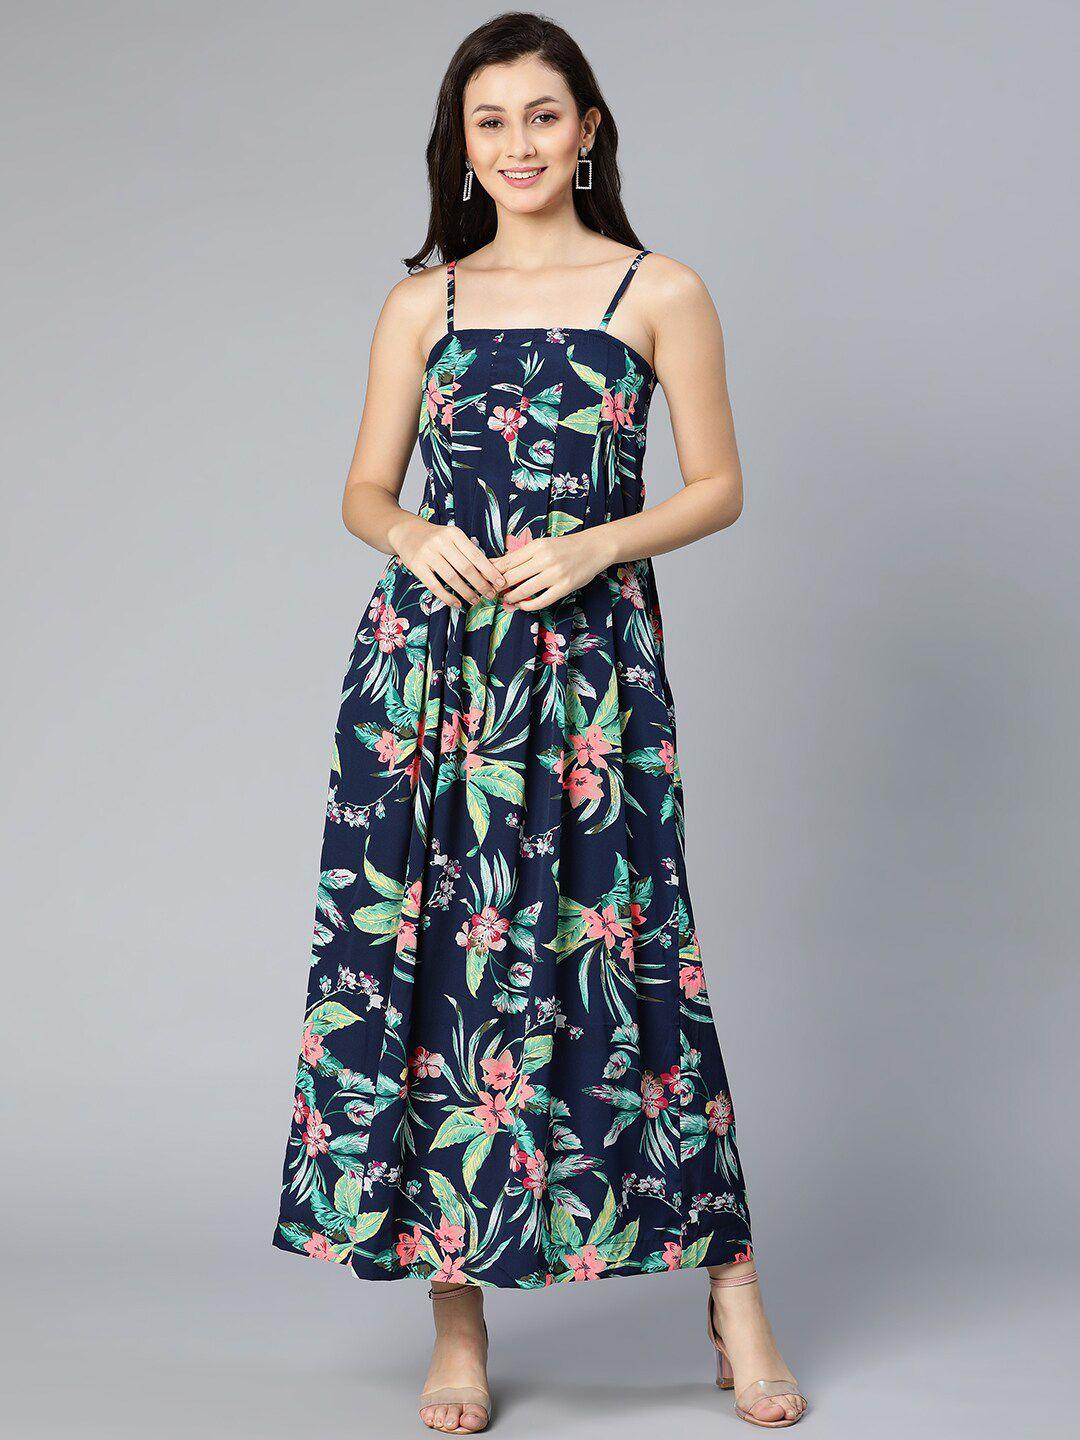 oxolloxo navy blue floral maxi dress